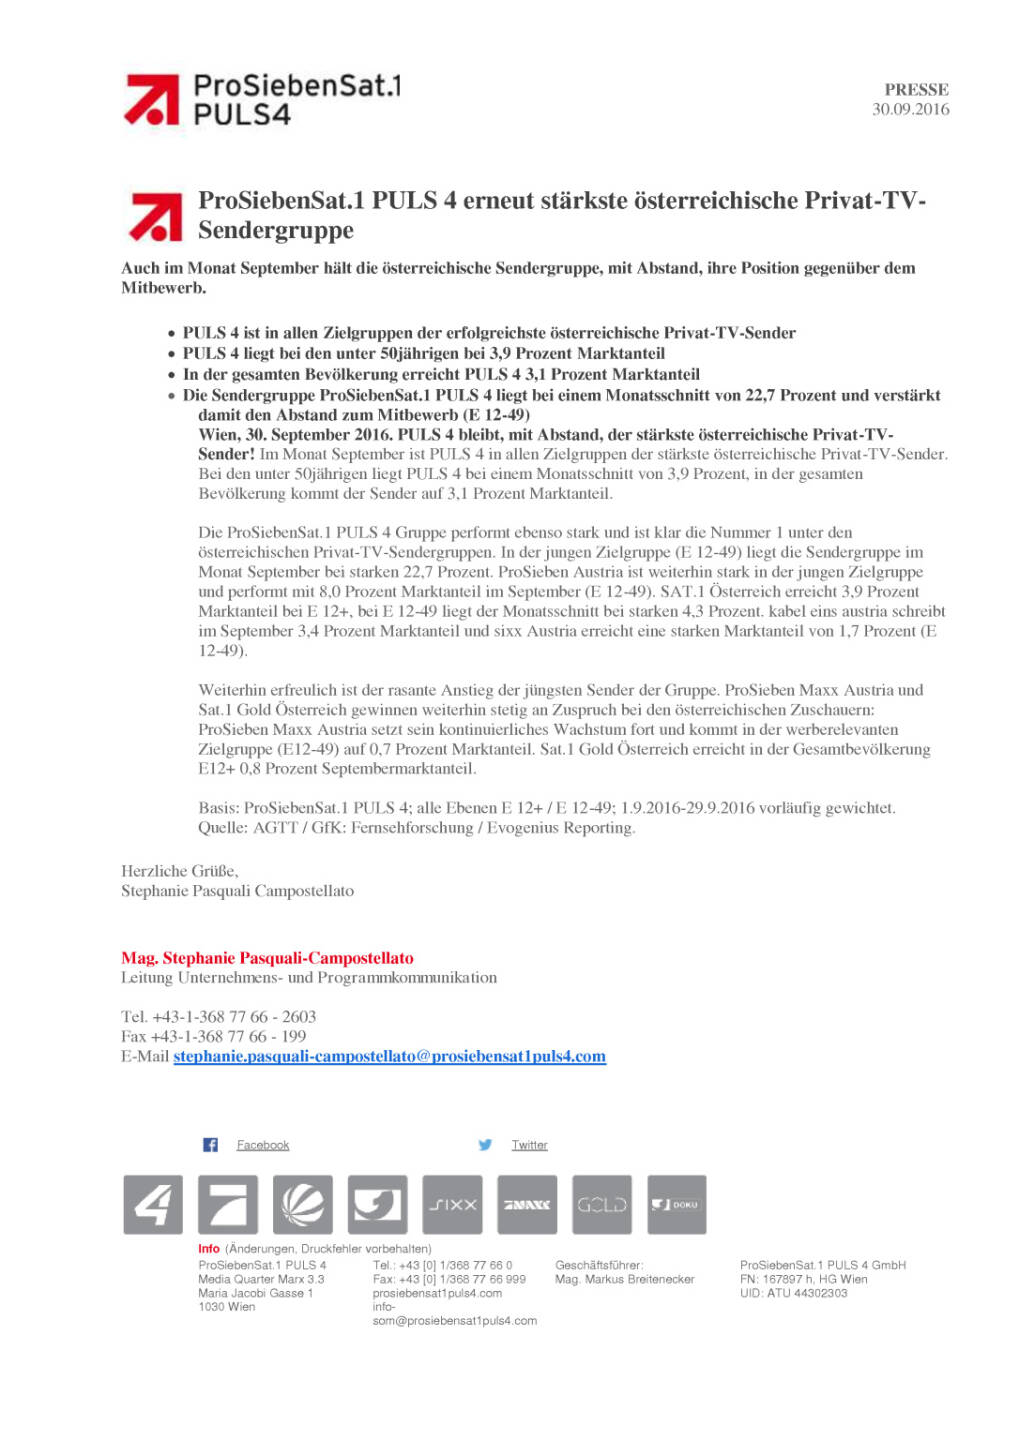 ProSiebenSat.1 Puls 4: Stärkste österreichische Privat-TV-Sendergruppe, Seite 1/1, komplettes Dokument unter http://boerse-social.com/static/uploads/file_1866_prosiebensat1_puls_4_starkste_osterreichische_privat-tv-sendergruppe.pdf